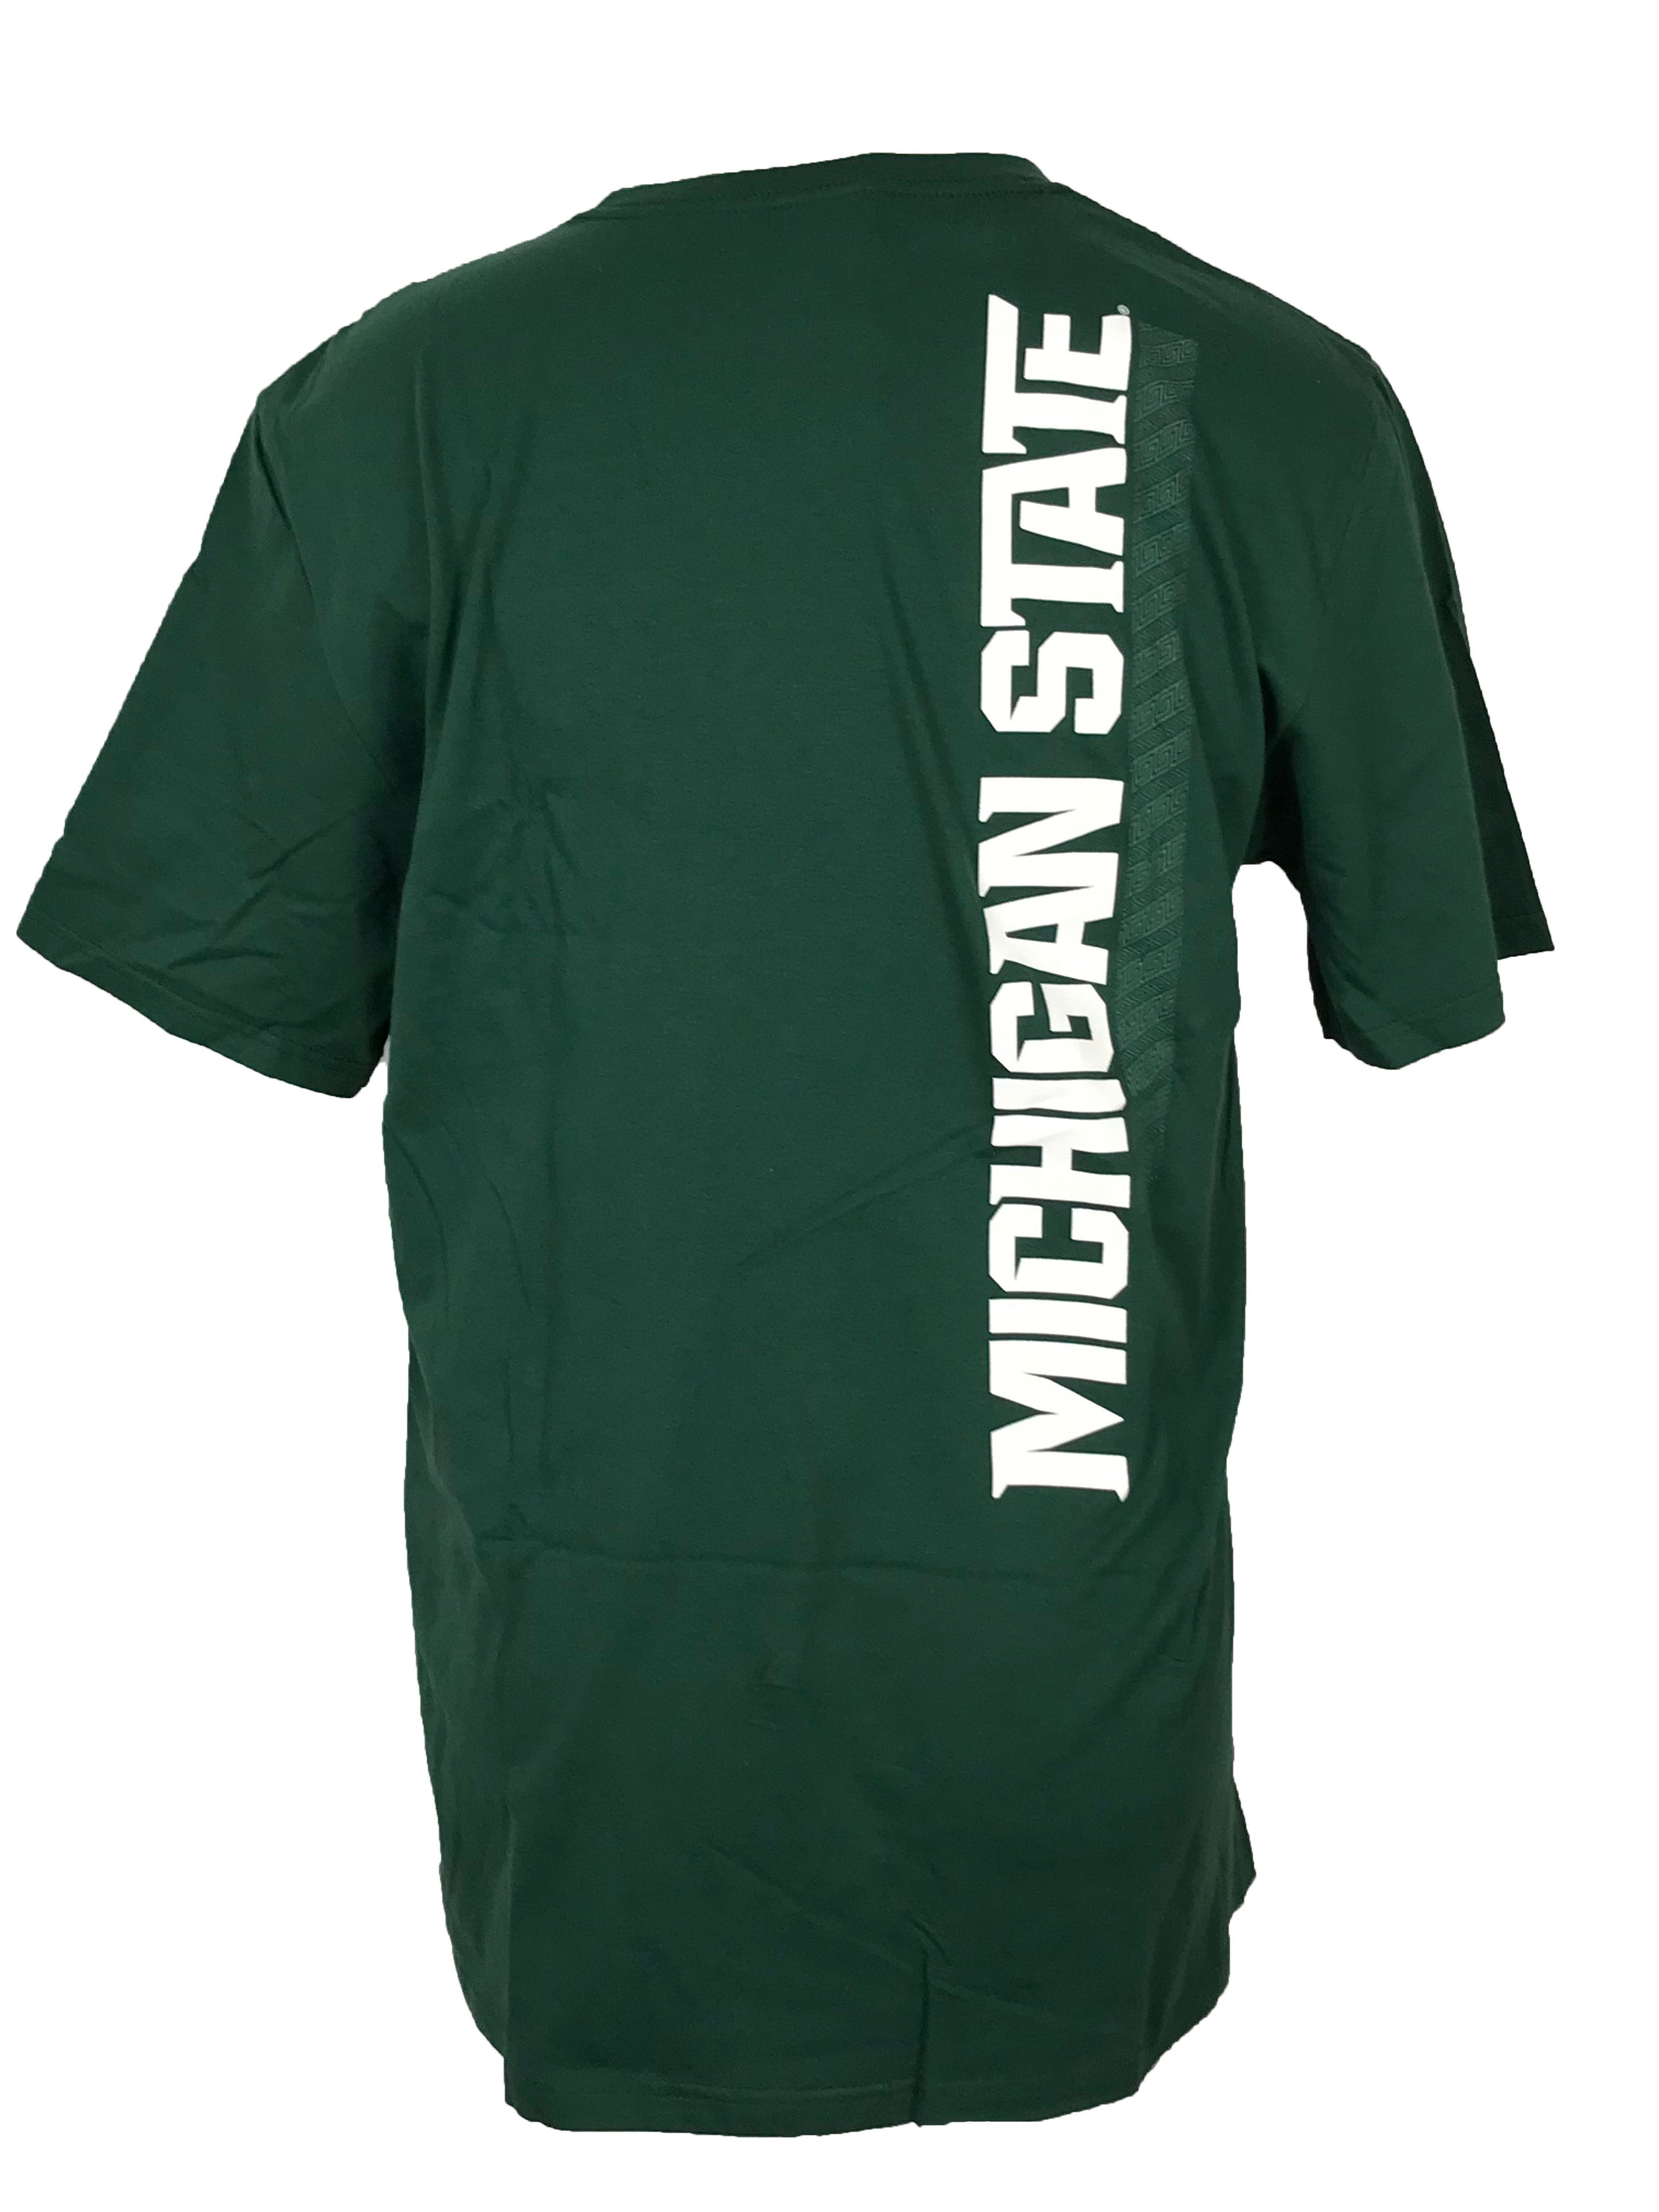 Nike Green Michigan State 2011 Football T-Shirt Men's Size L